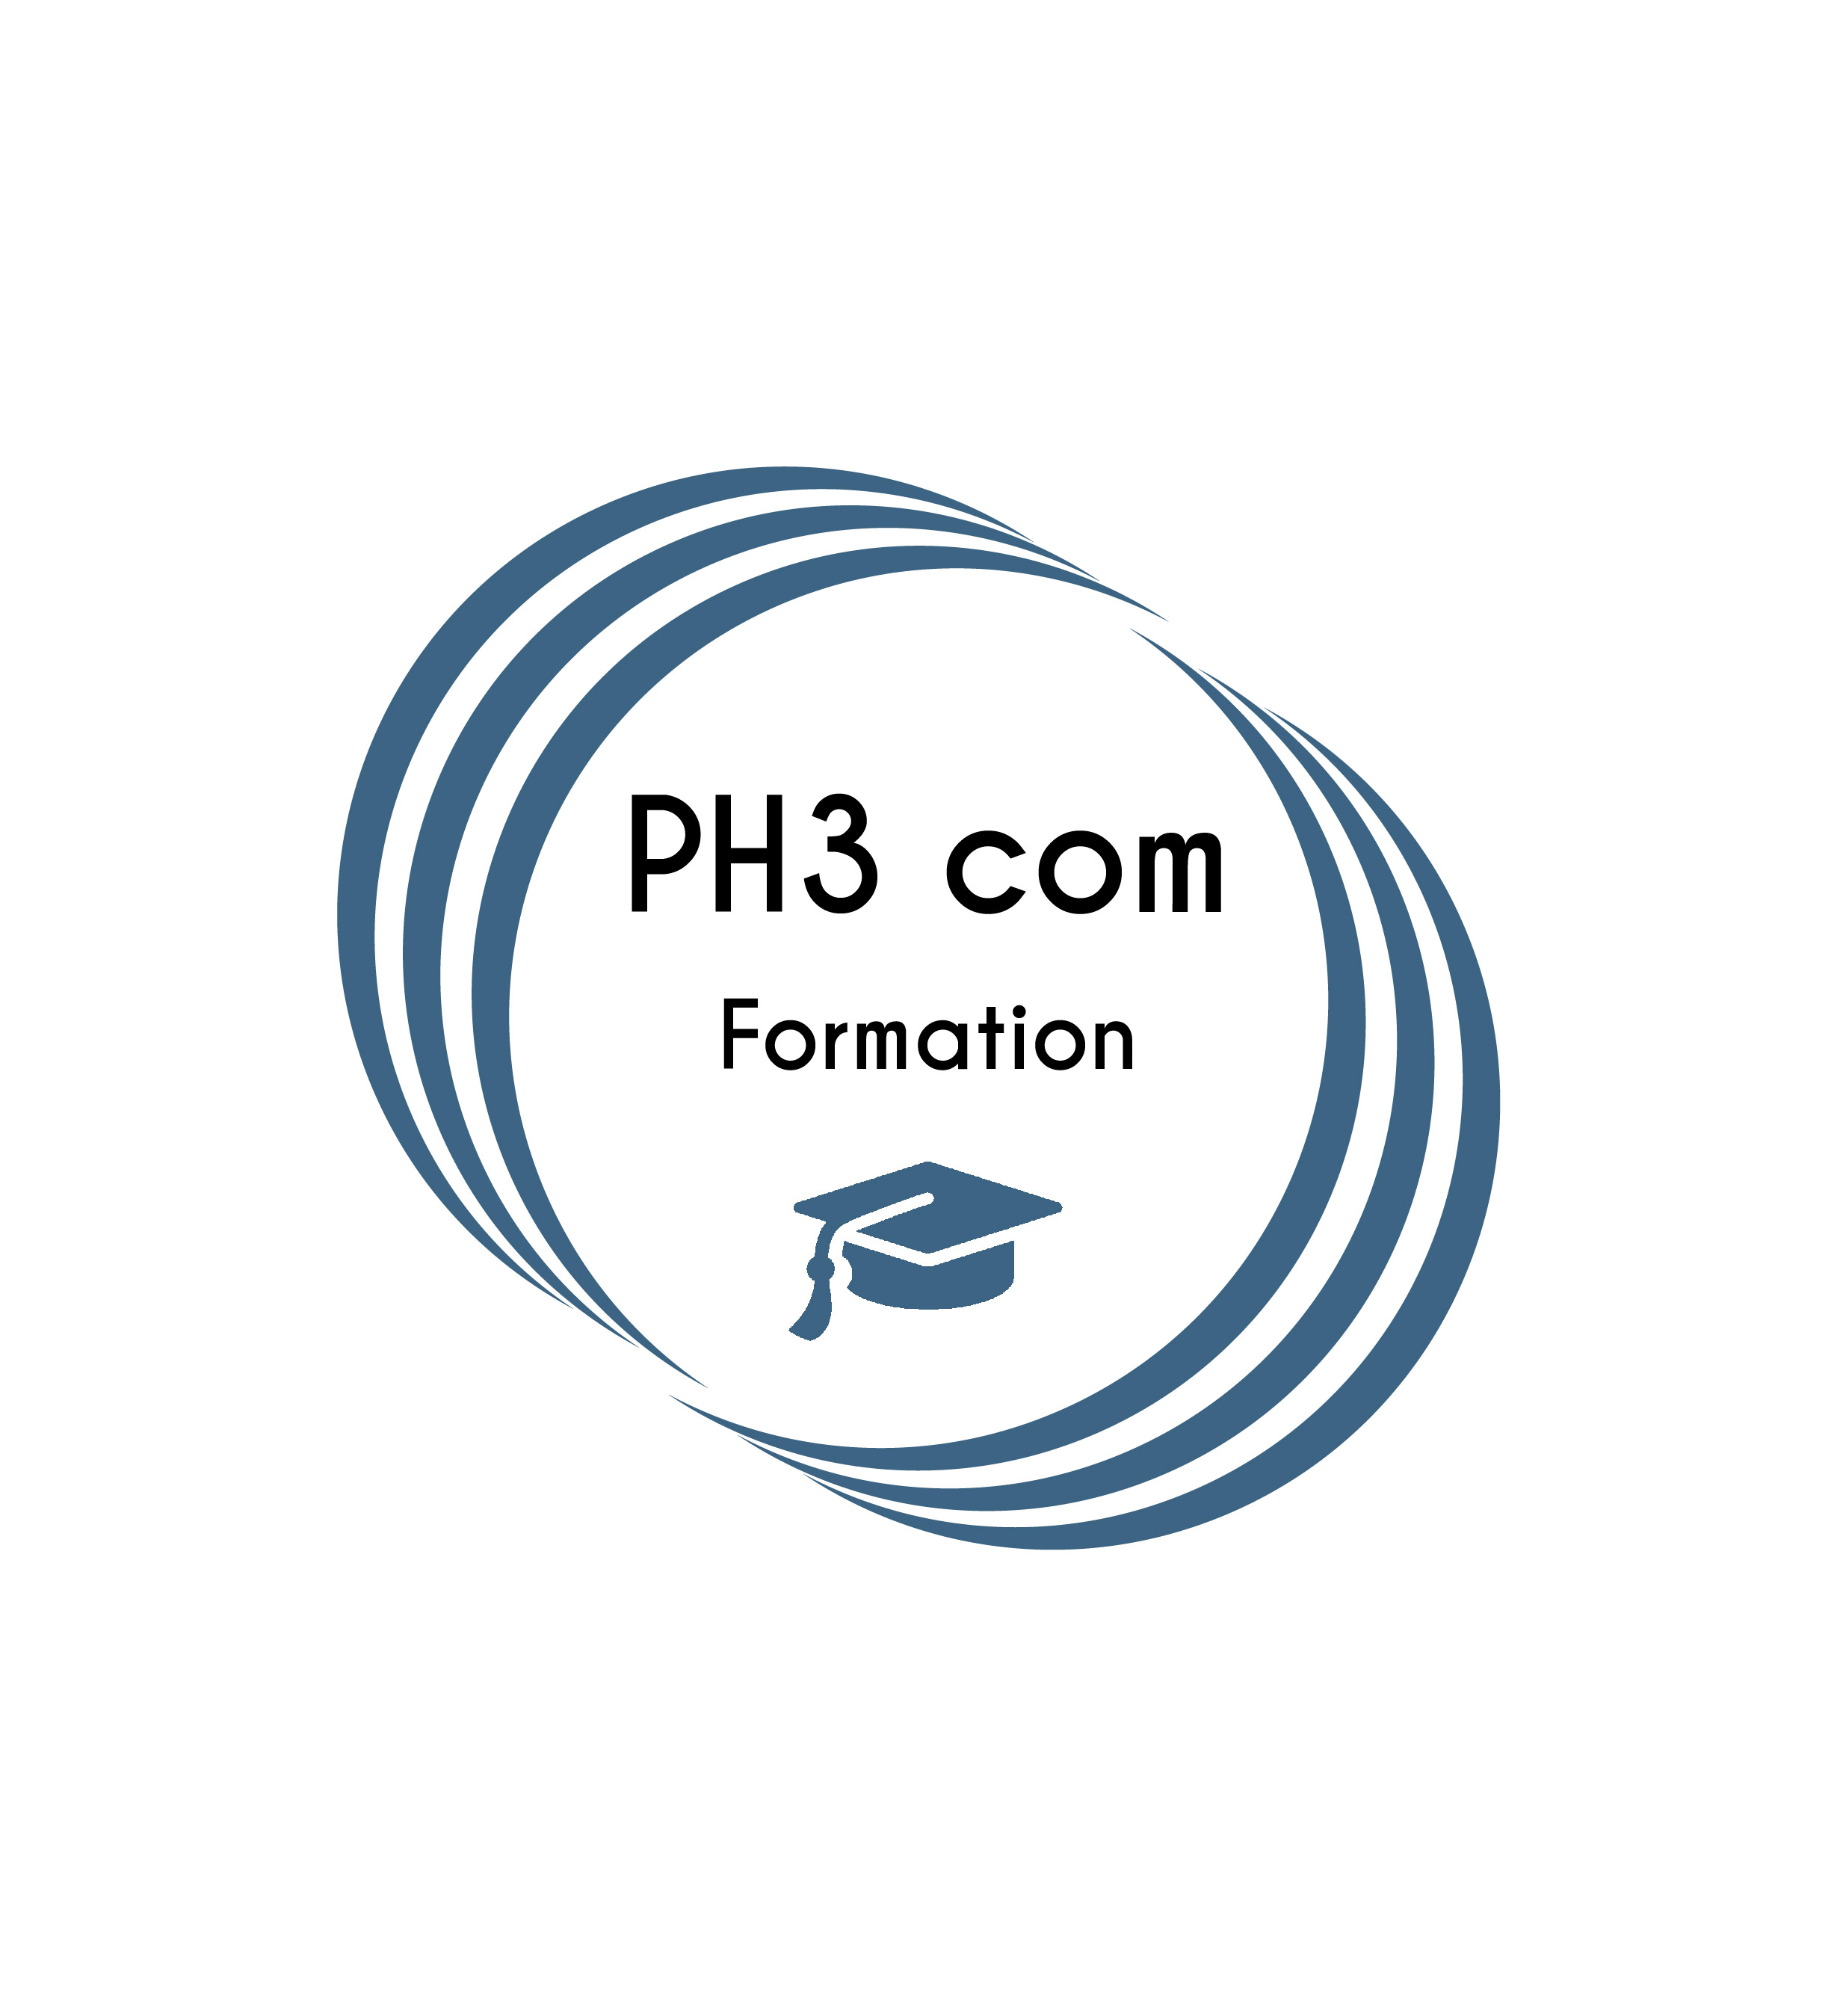 Formations photos, visites virtuelles, ph3com